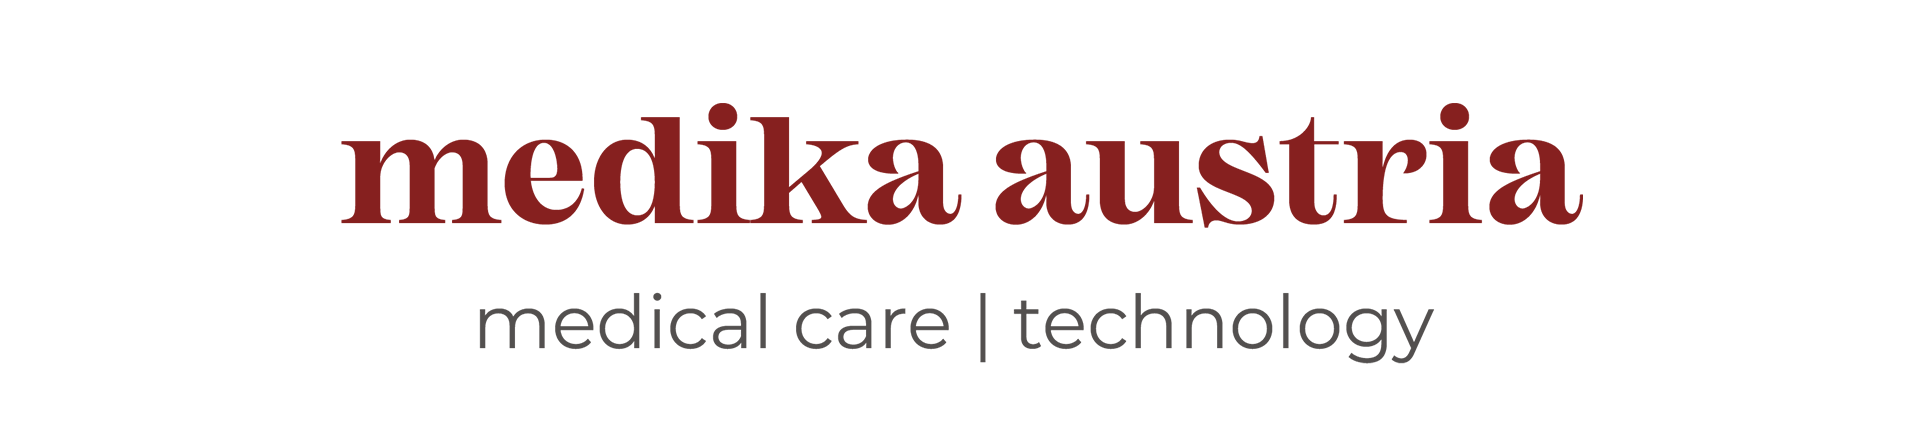 medika logo austria_en